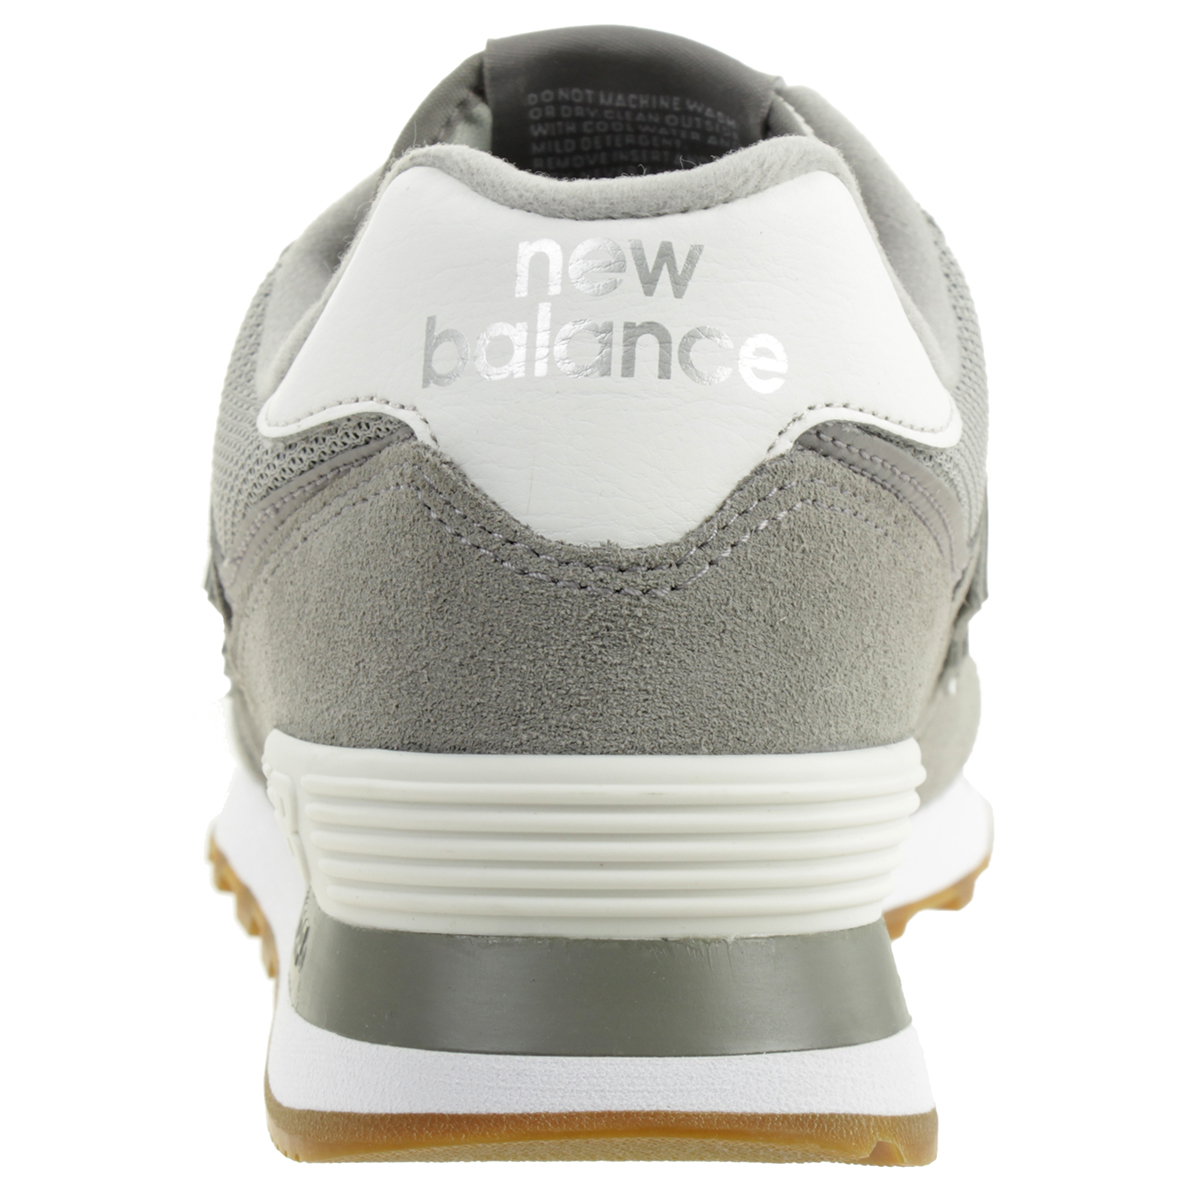 New Balance ML 574 SPU Classic Sneaker Herren Schuhe grau